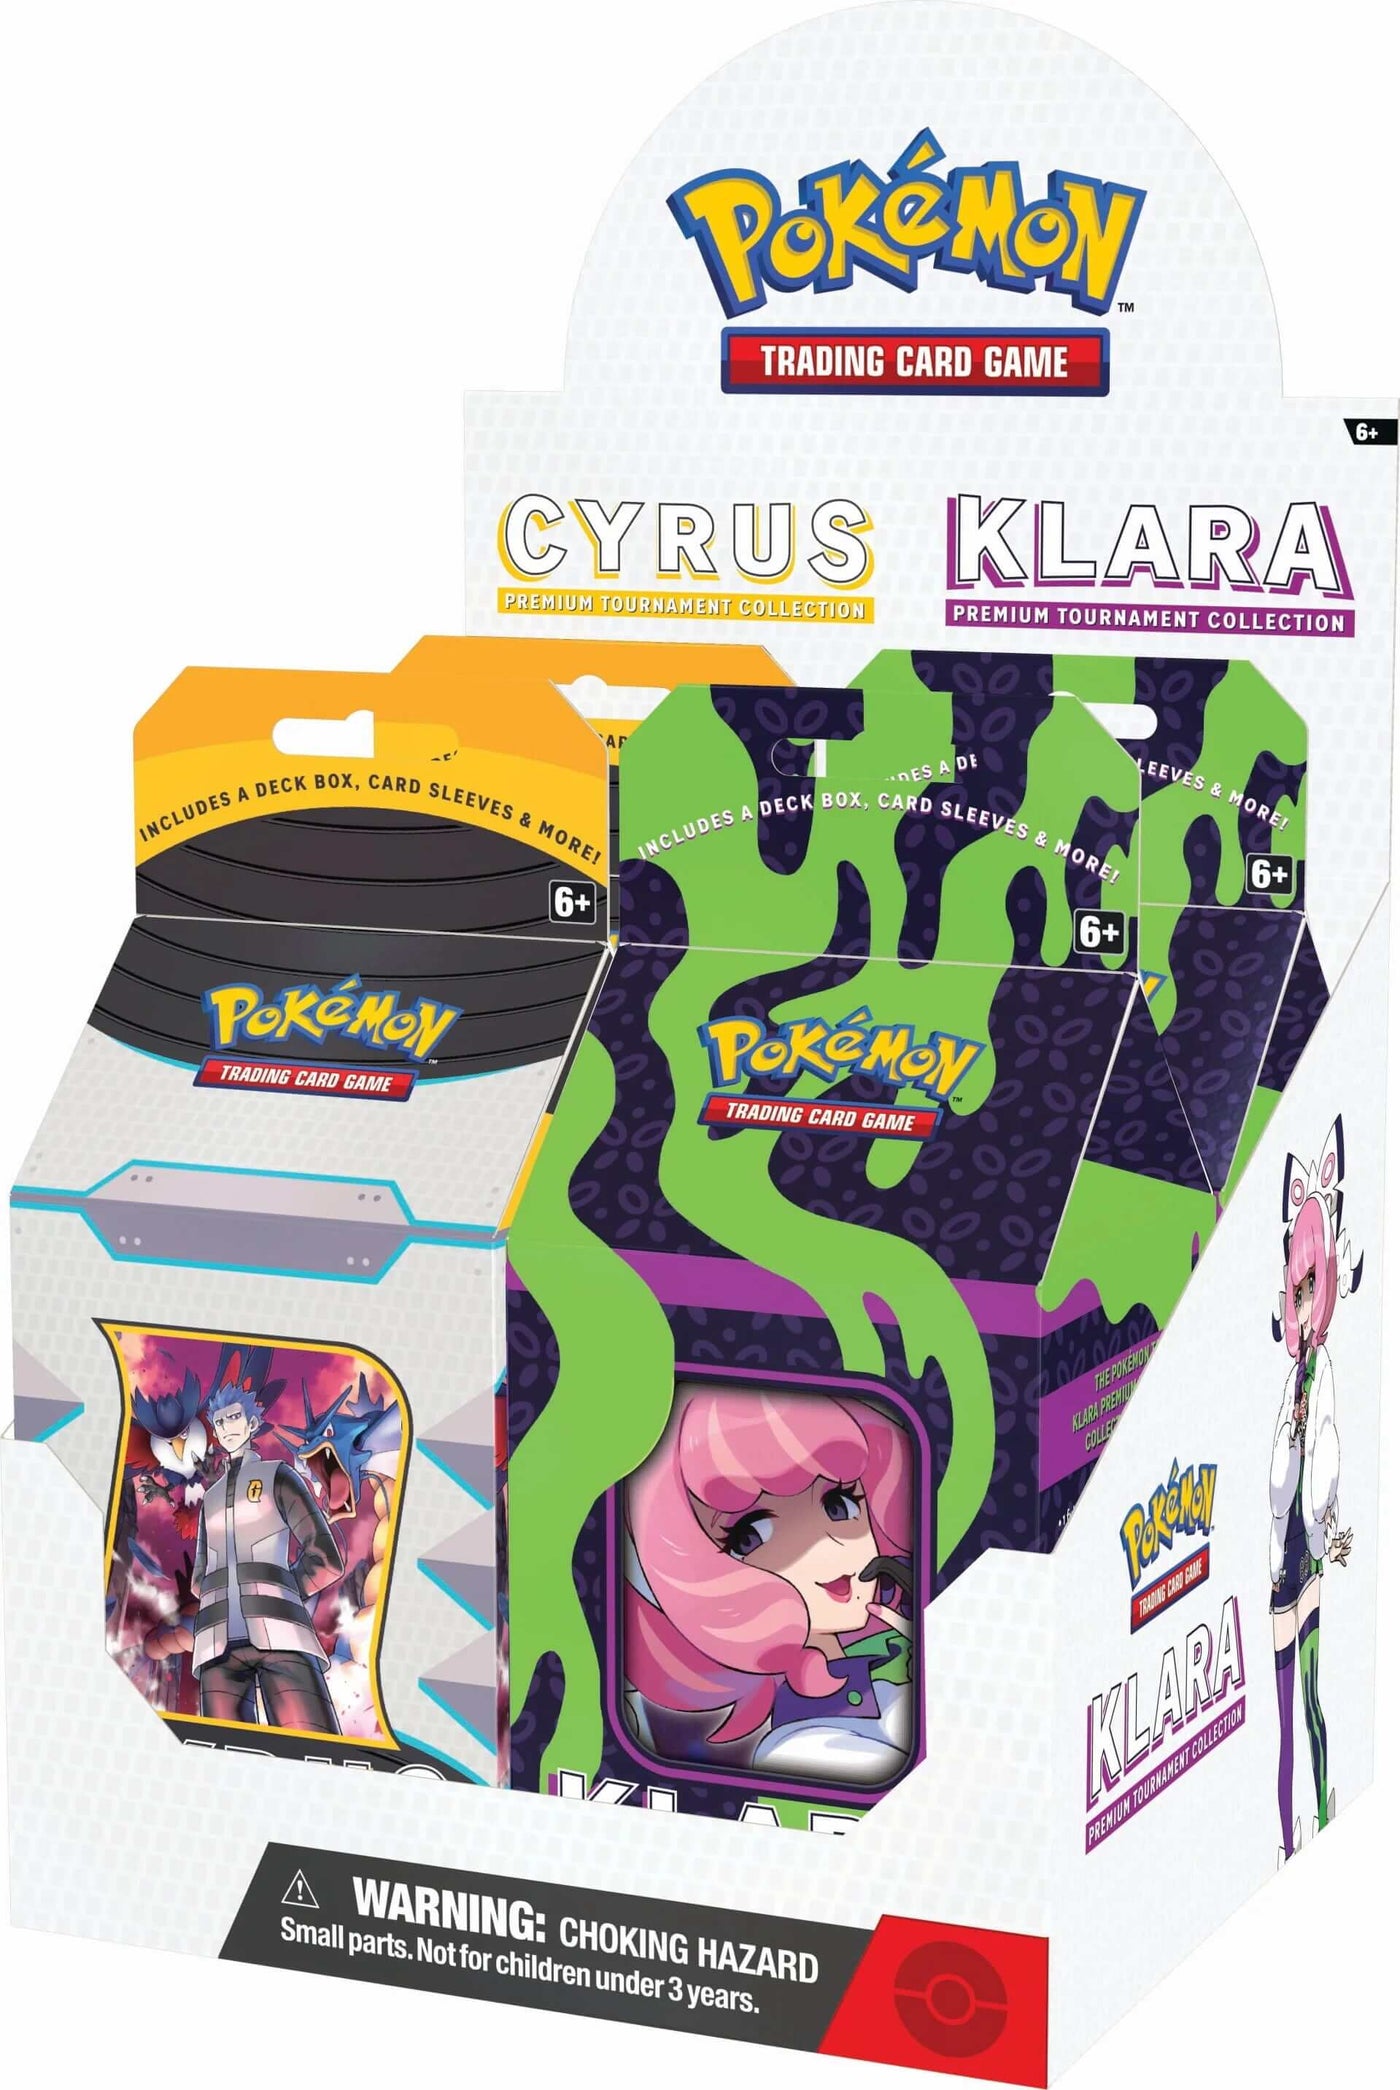 Pokémon: Cyrus and Klara Premium Tournament Collection Box